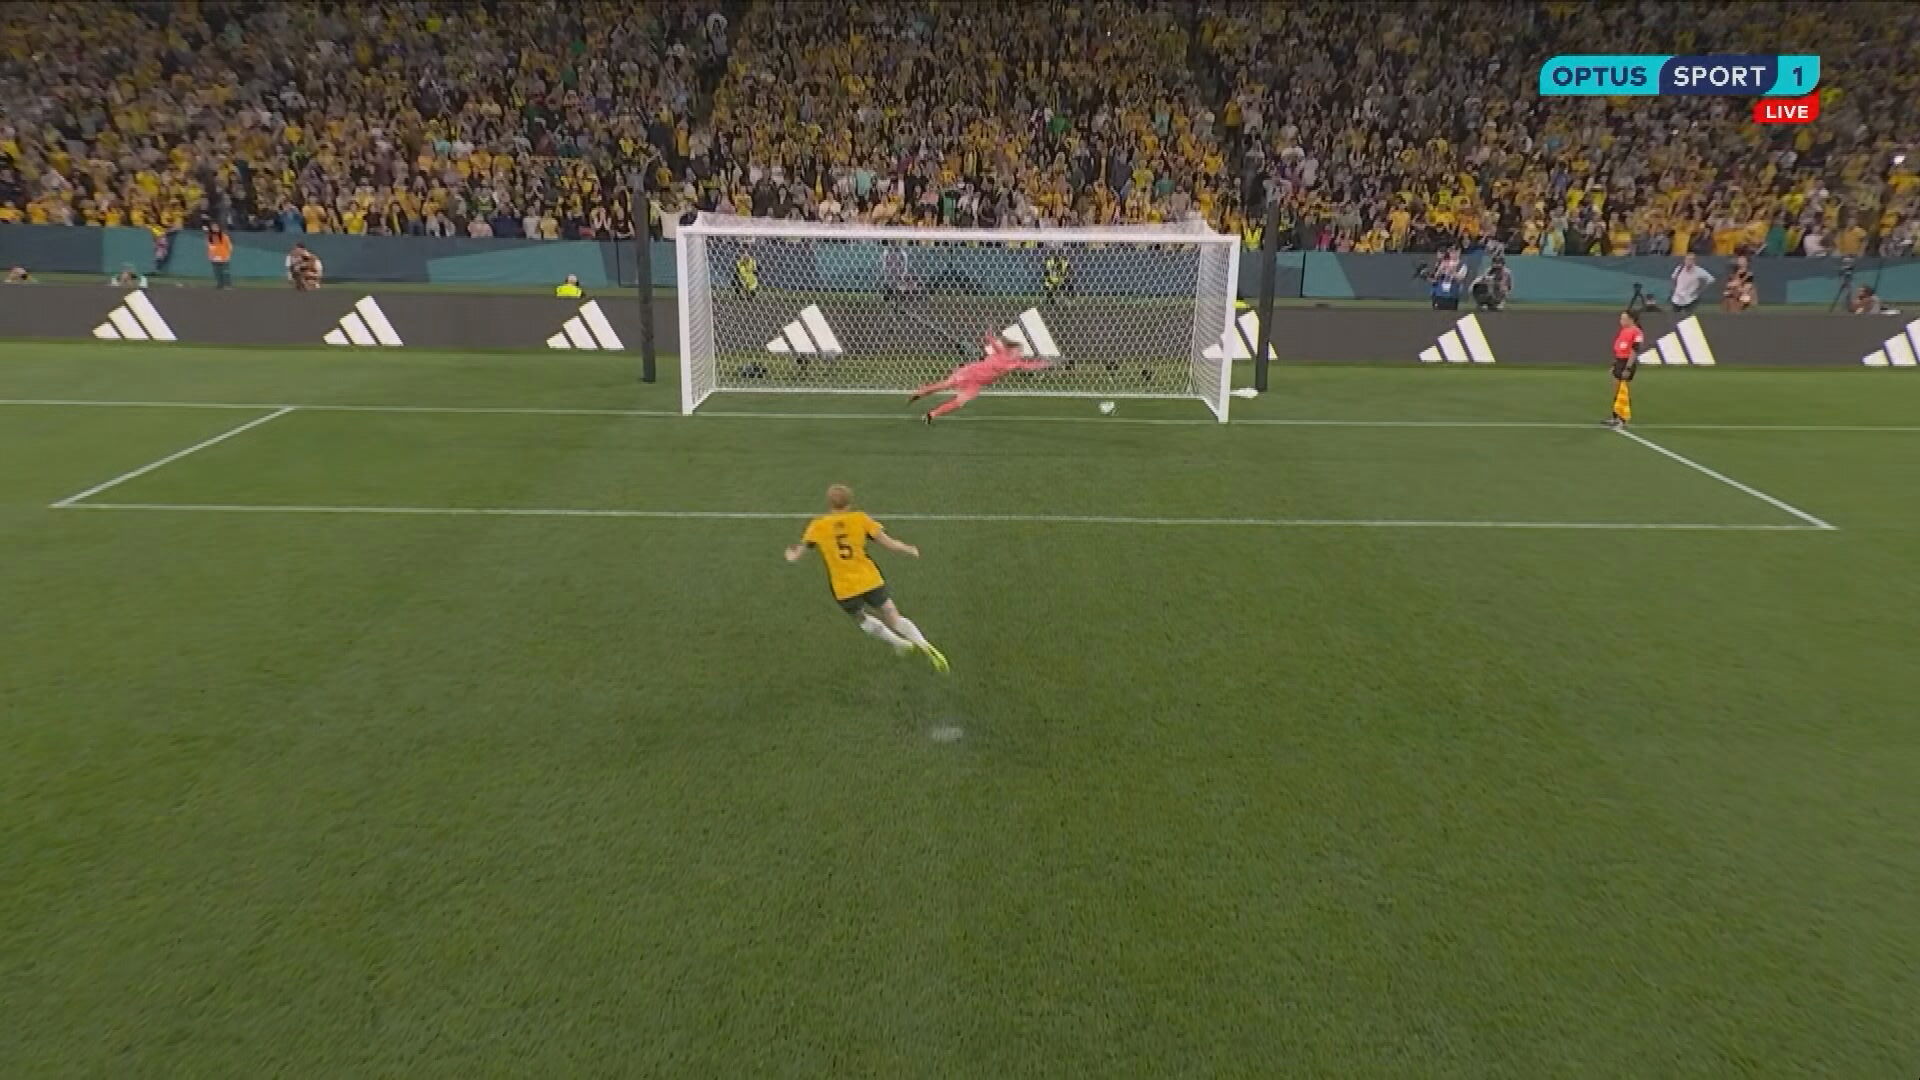 Matildas triumph in penalty shootout thriller over France to book World Cup semi-final